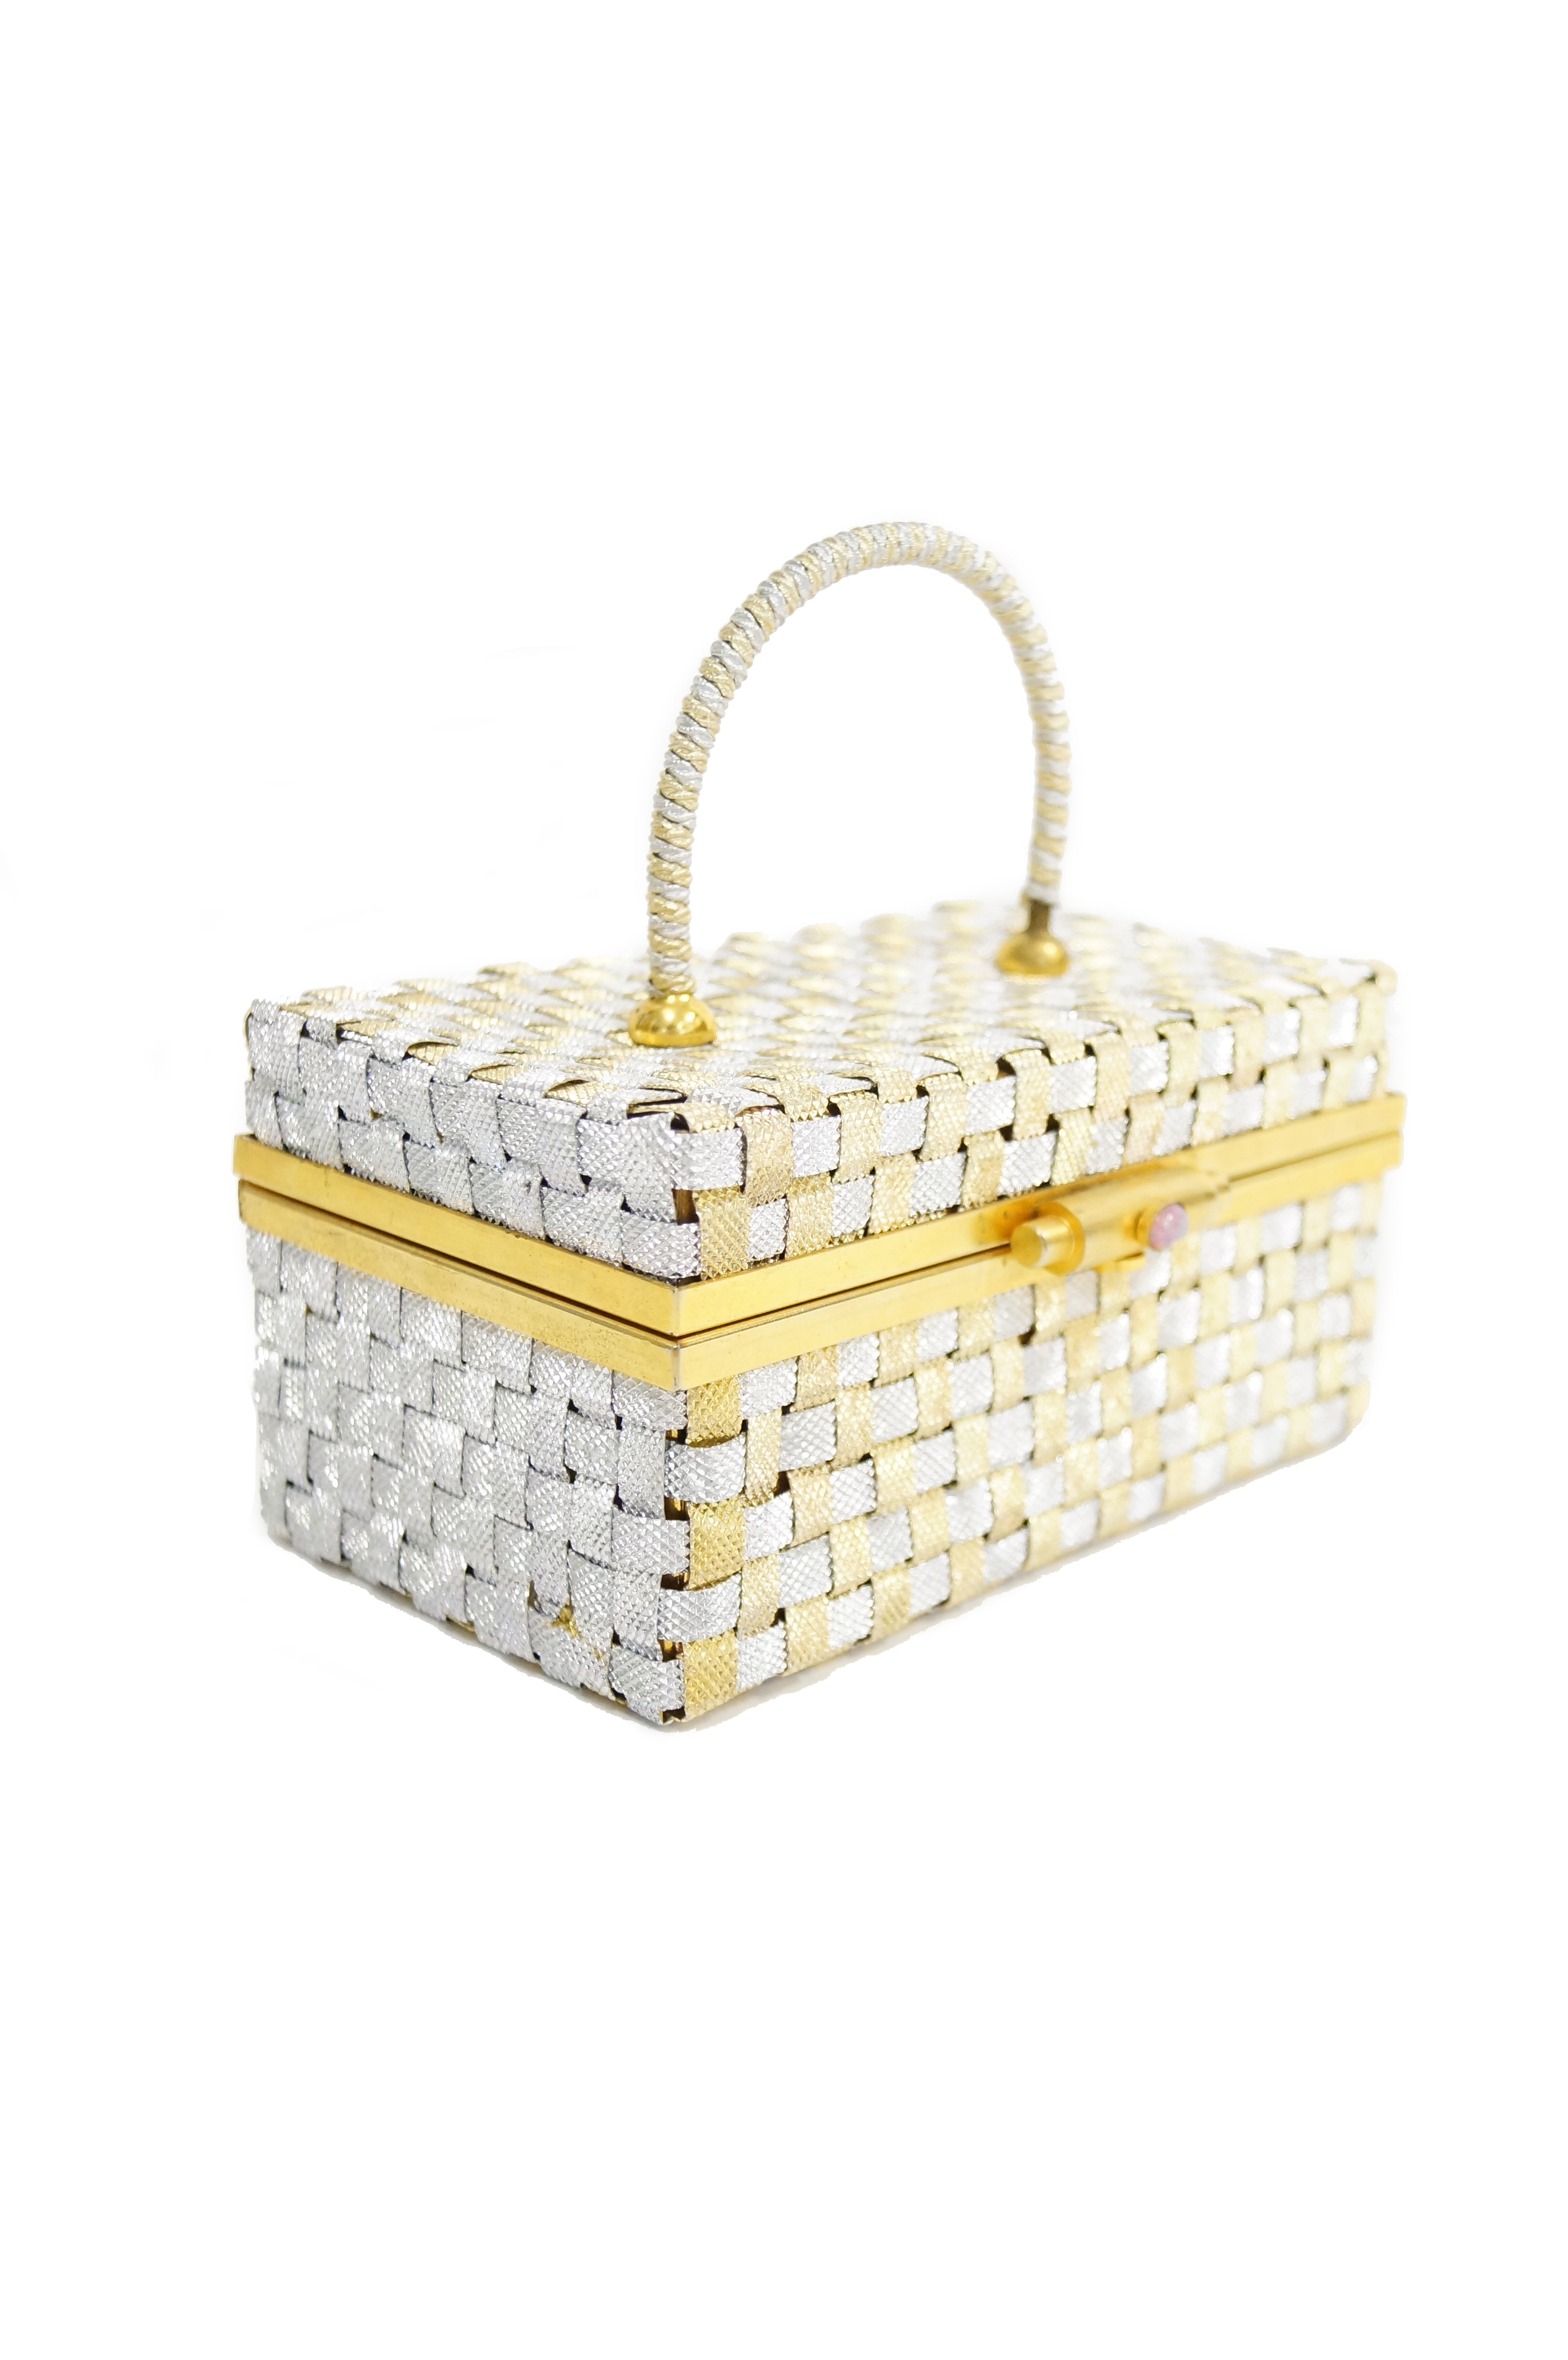 Copperton Lane: DeLill Gold Beaded Handbag Purse Mother of Pearl